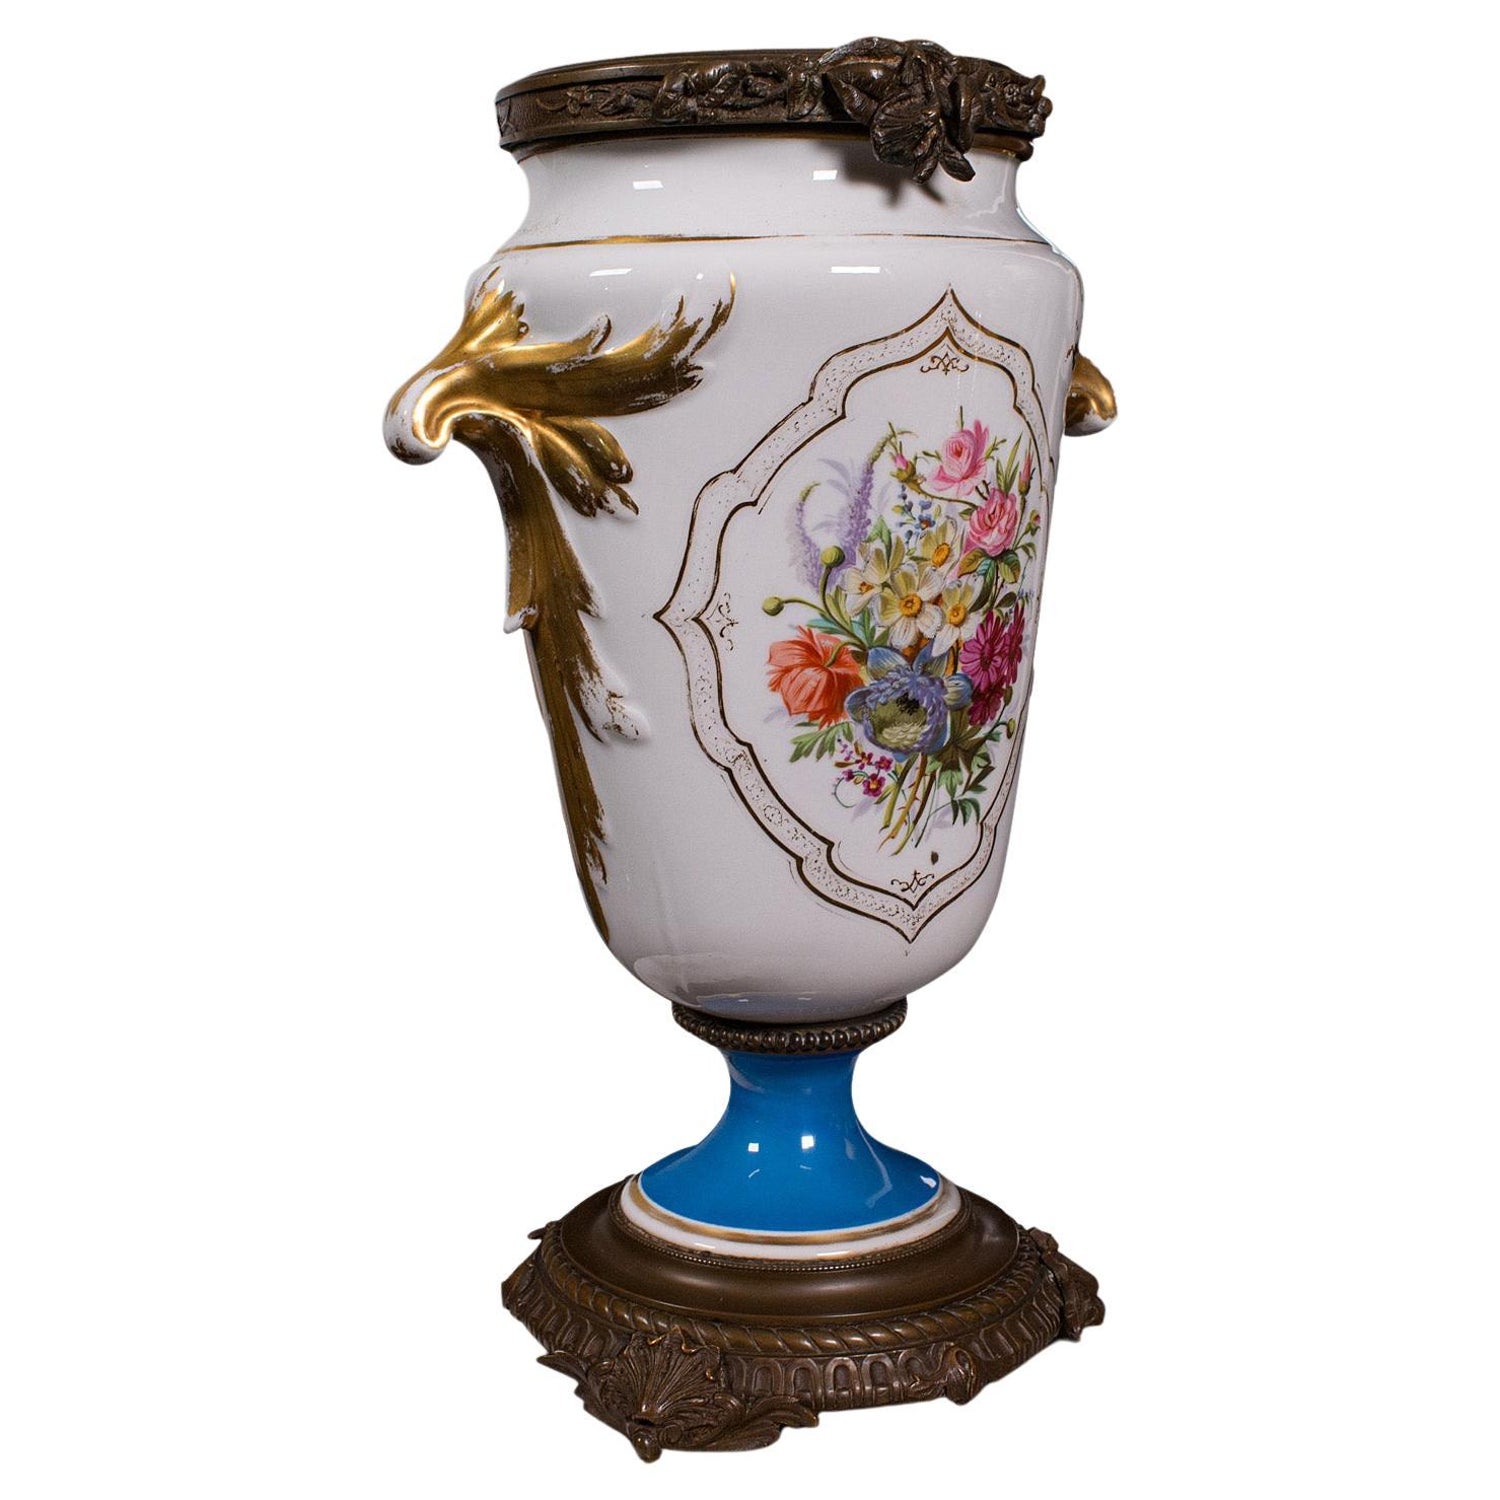 https://a.1stdibscdn.com/antique-decorative-jardiniere-french-ceramic-display-planter-vase-victorian-for-sale/f_26453/f_295449421657659669630/f_29544942_1657659669973_bg_processed.jpg?width=1500